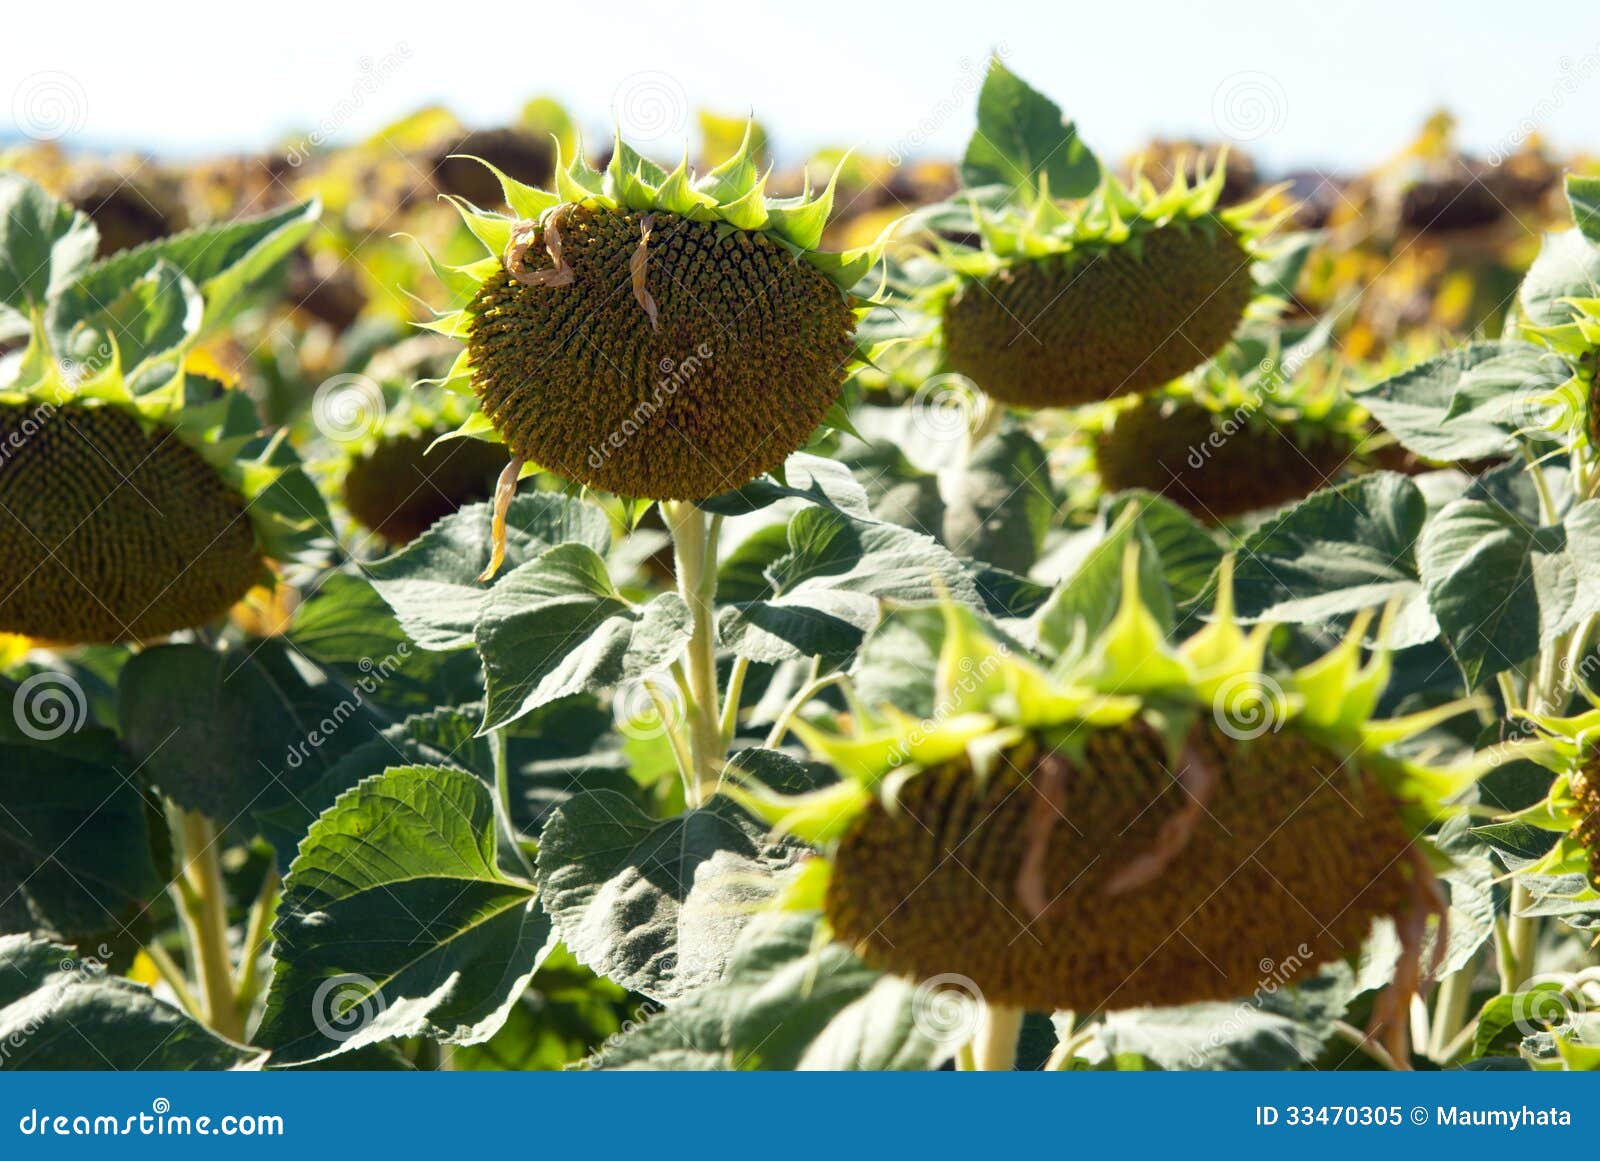 Sunflowers for harvest stock image. Image of ripe, leaf - 33470305